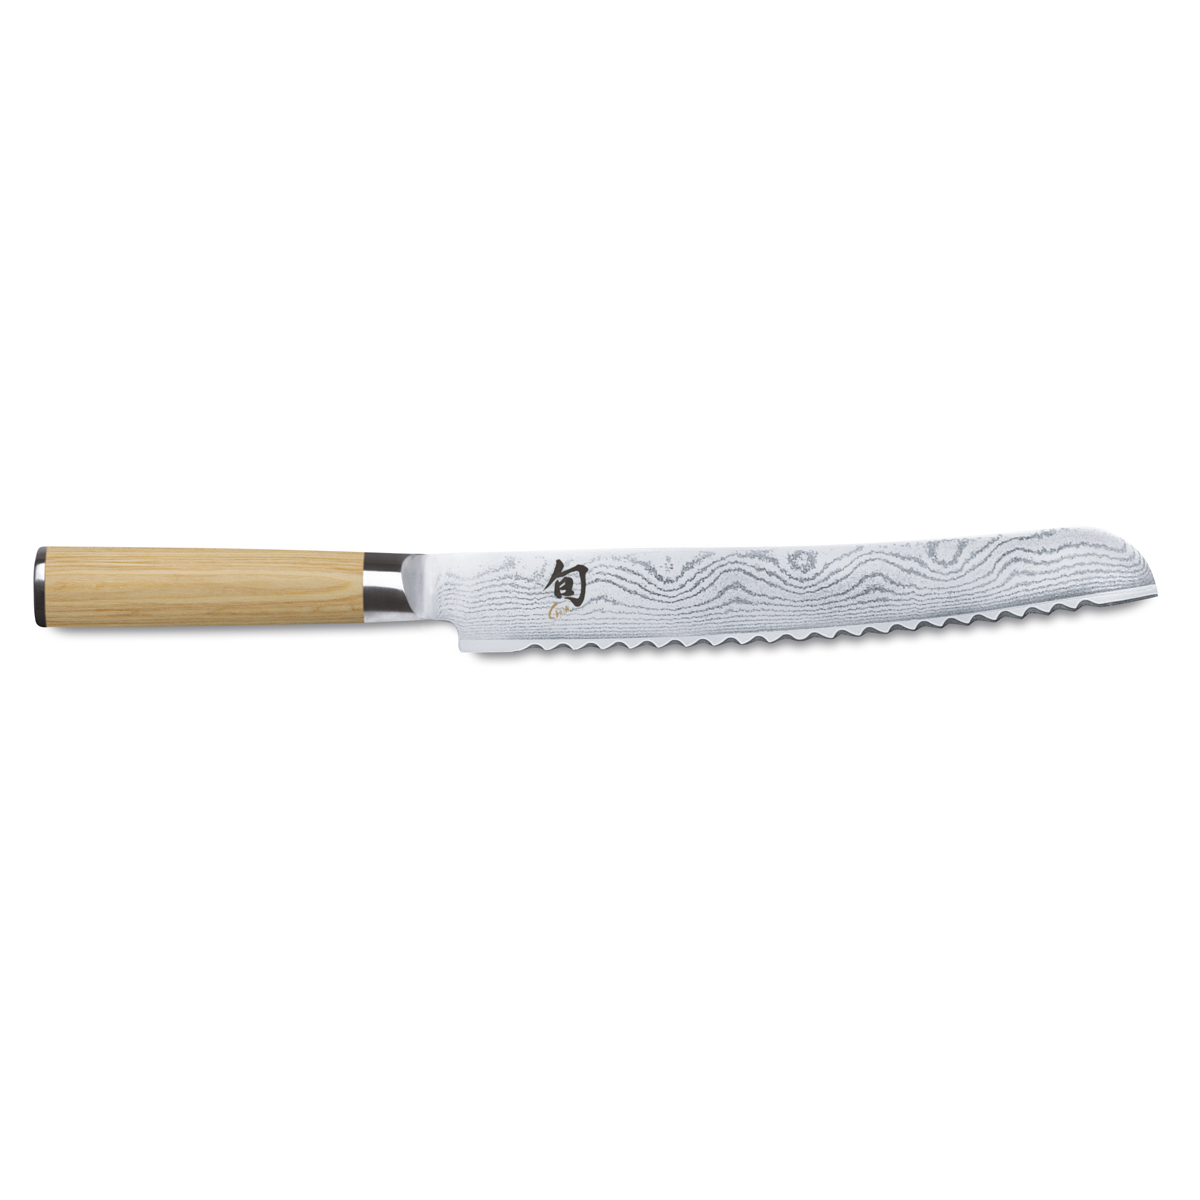 KAI Shun Classic White Brotmesser 23 cm - 32-lagiger Damaststahl - Griff Pakkaholz